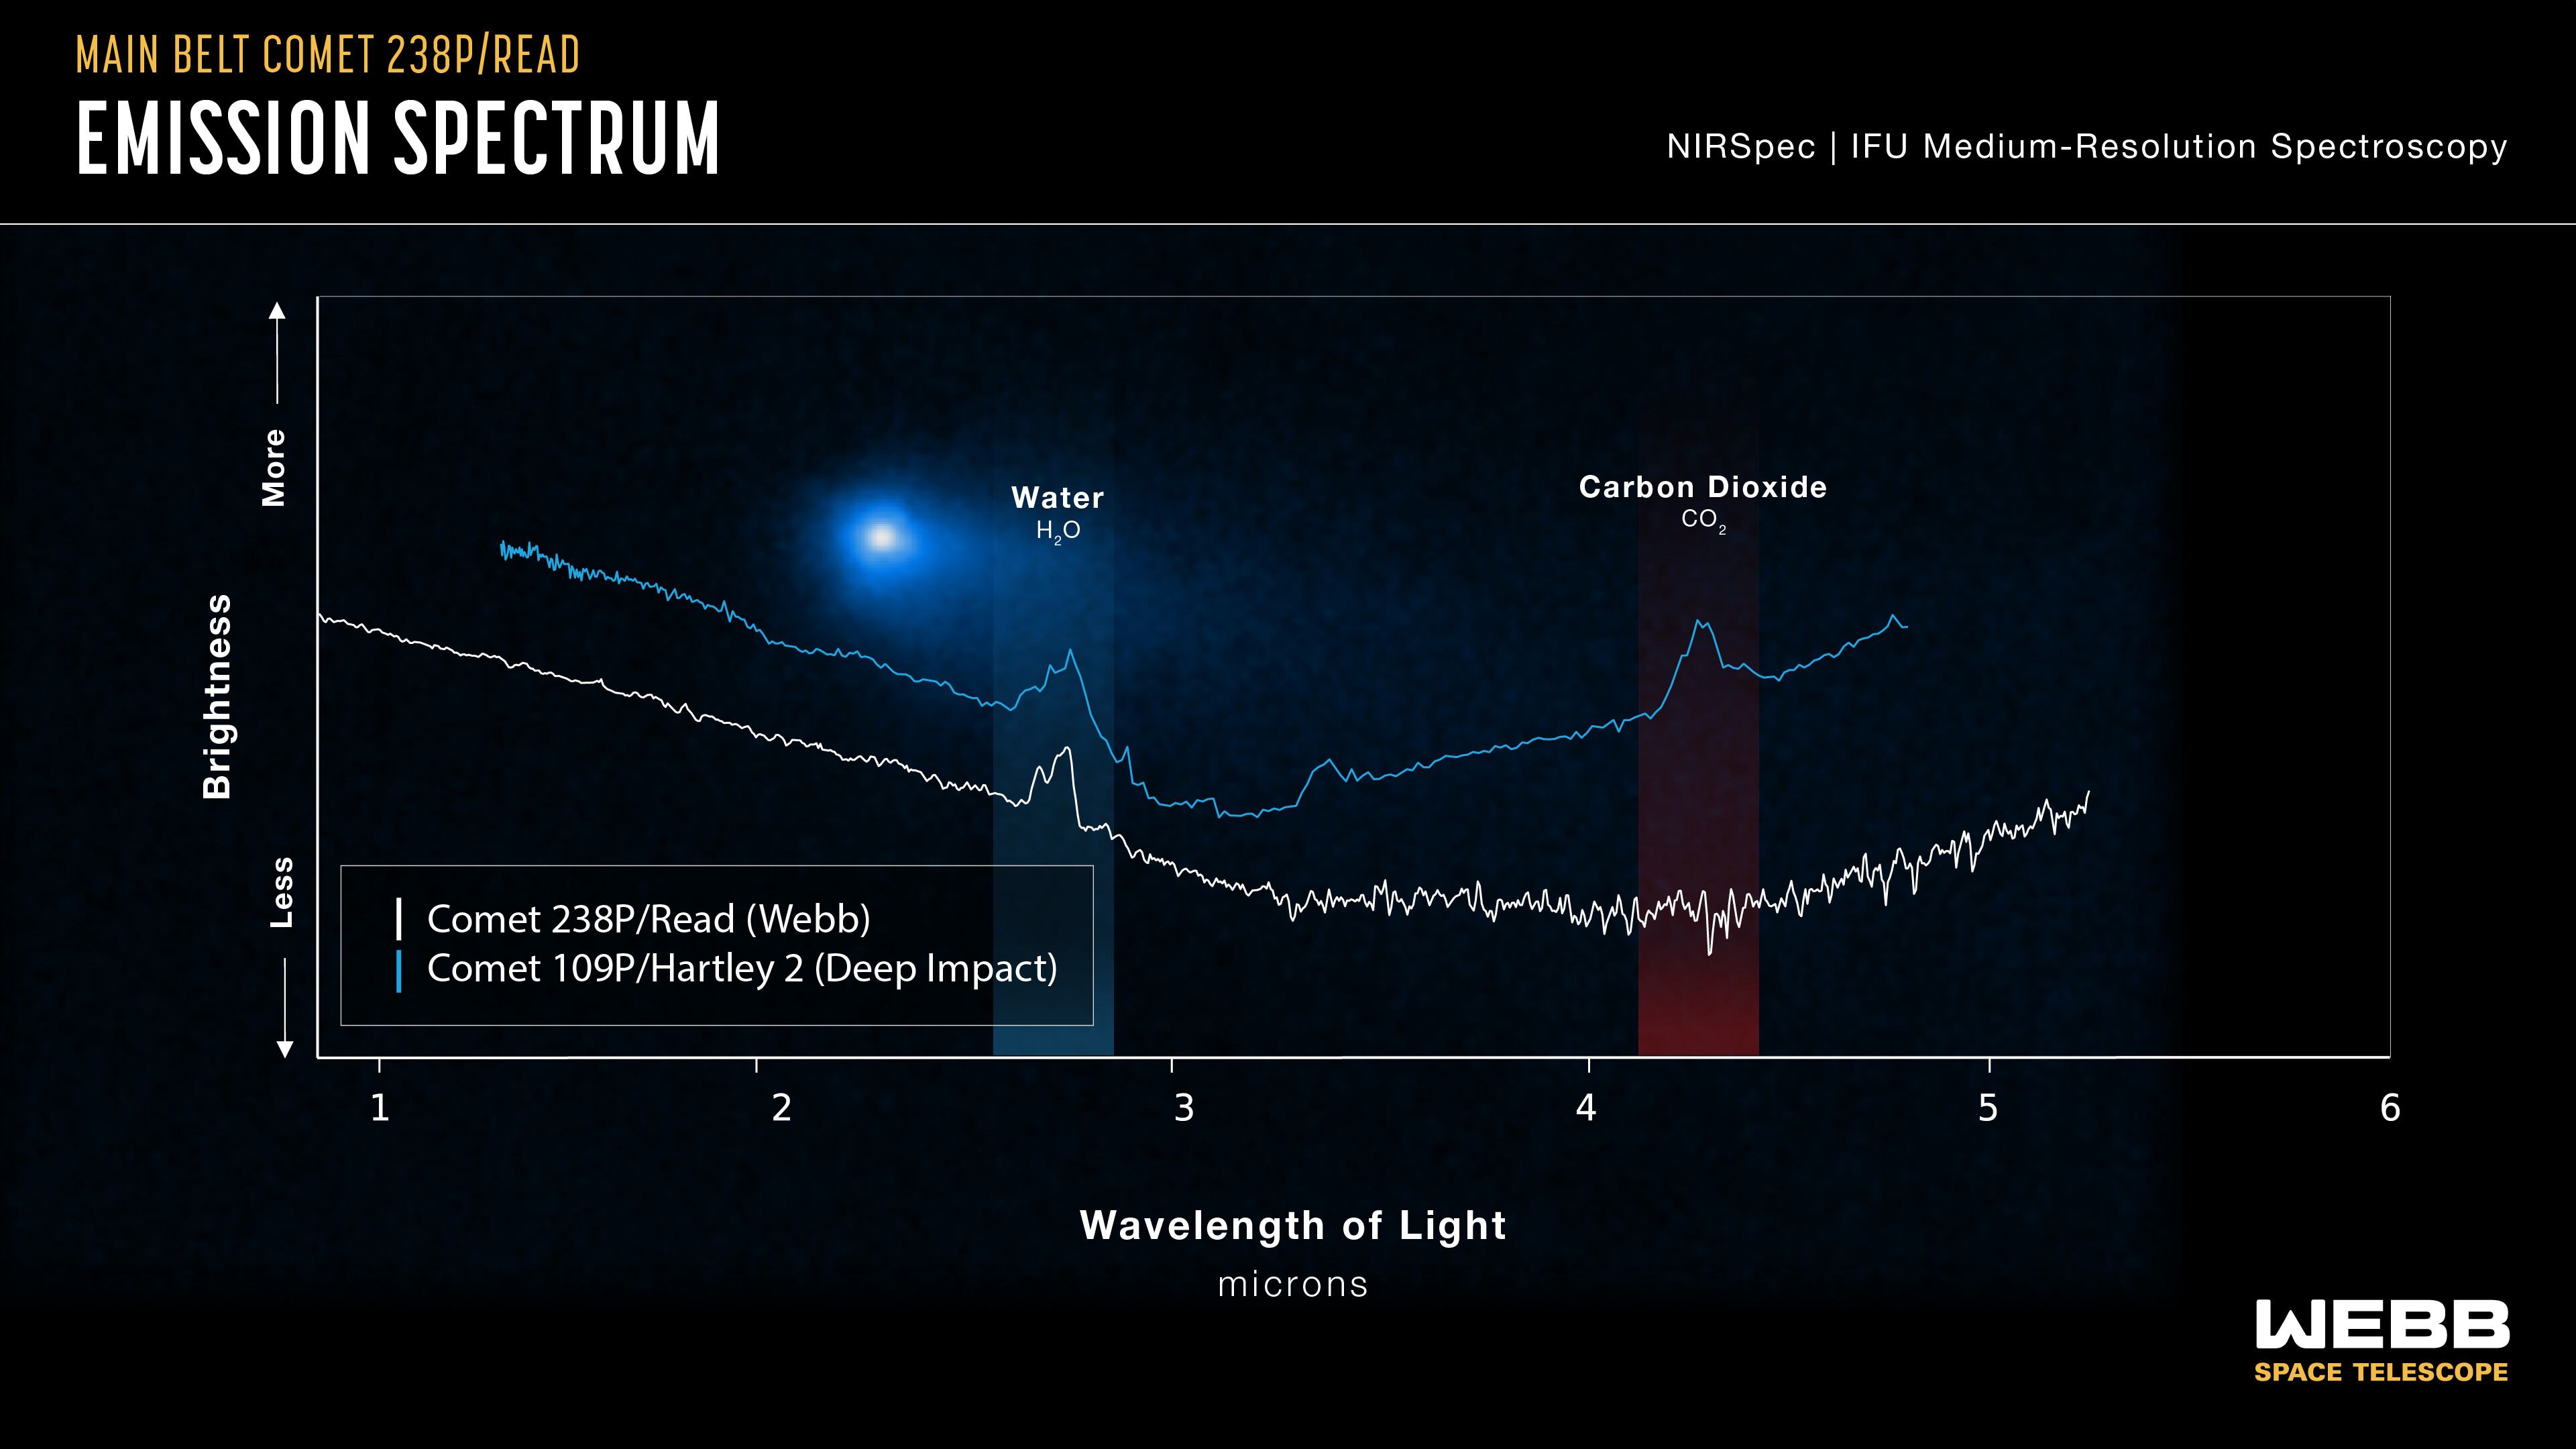 Grafik yang menunjukkan spektrum cahaya yang dipancarkan oleh komet